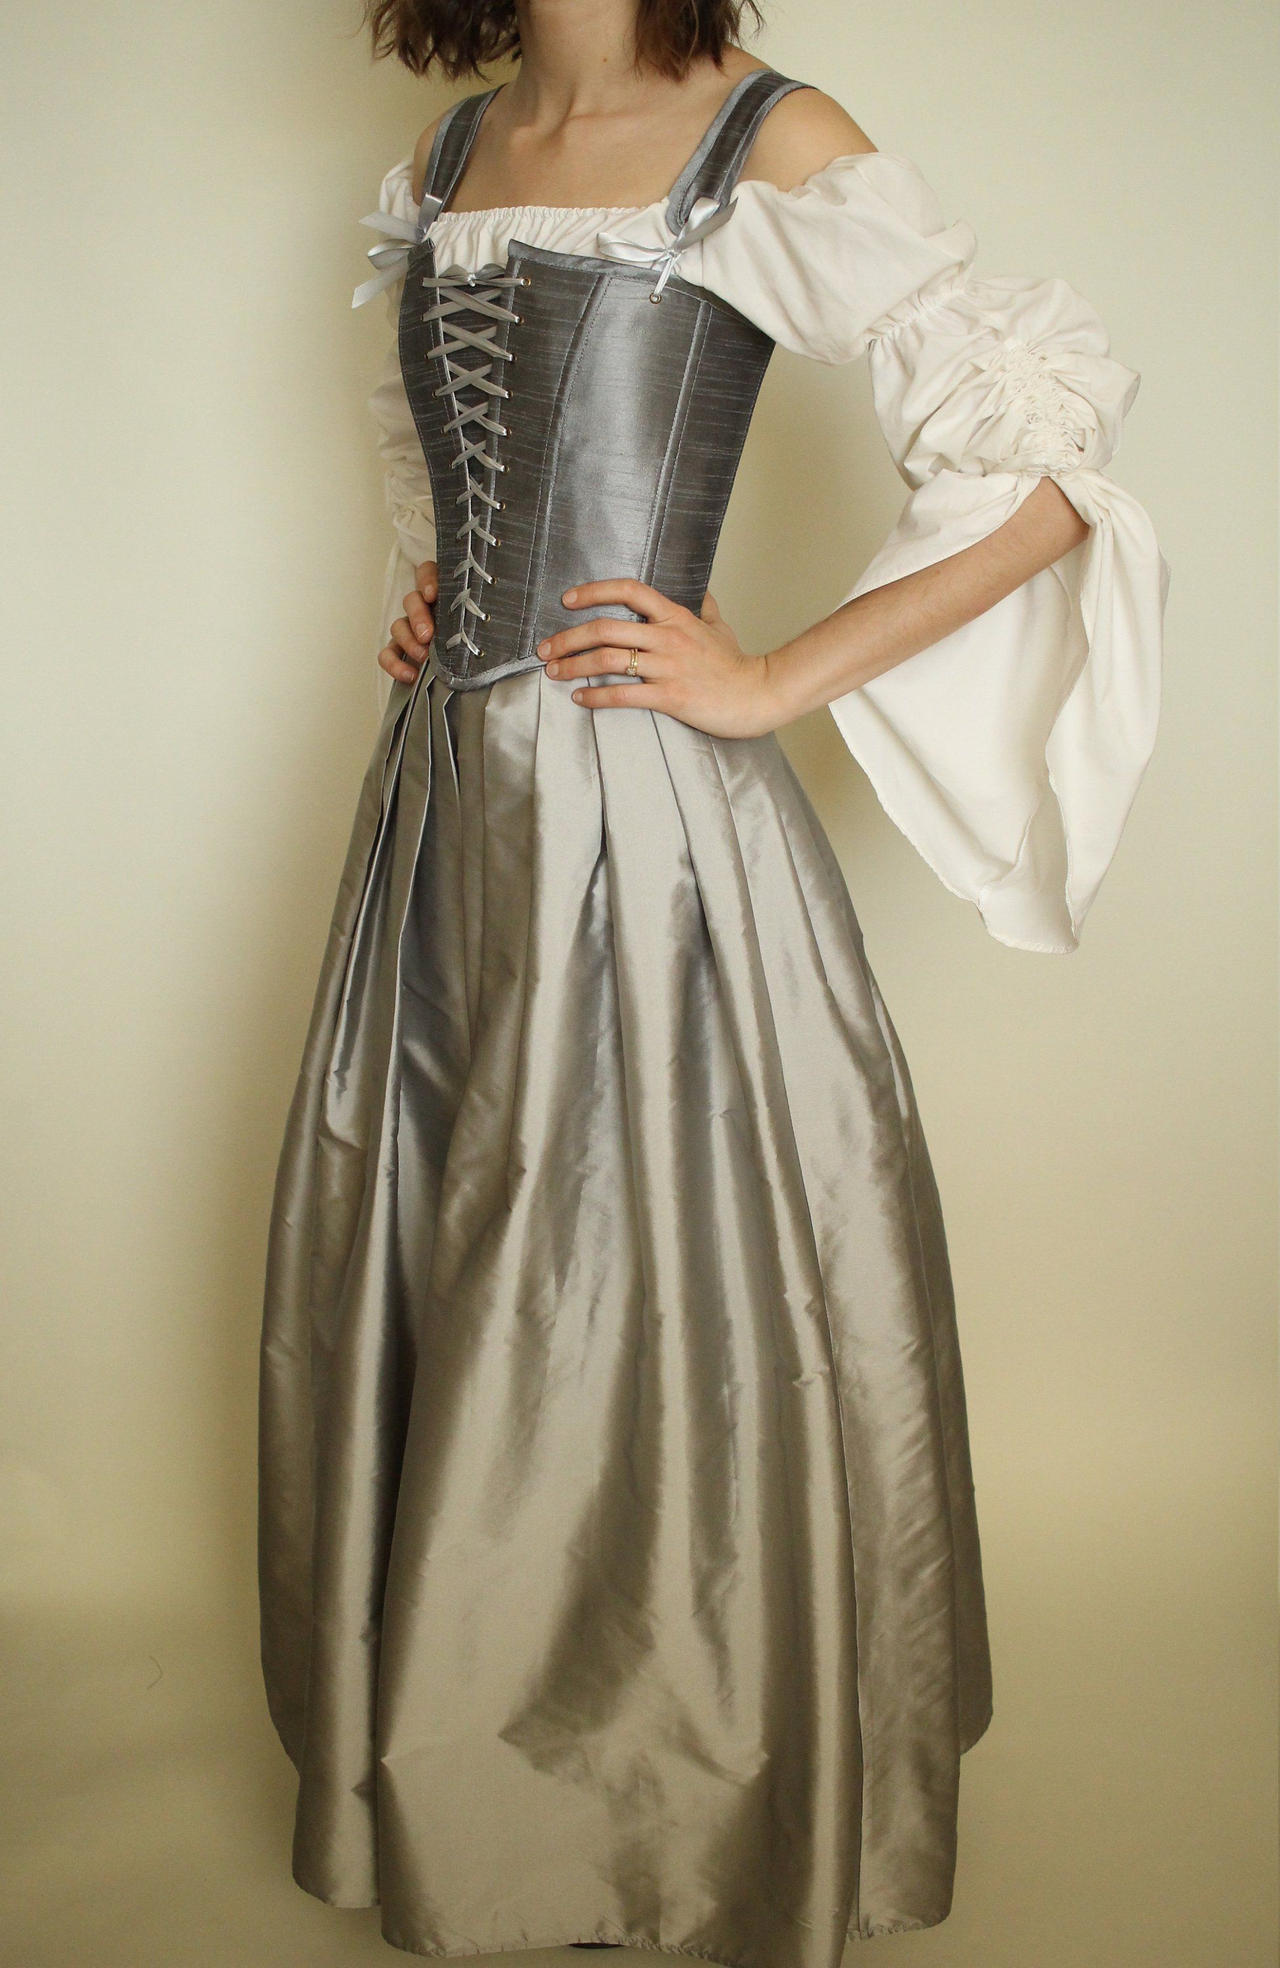 silver grey corset peasant bodice dress by jkfangirl on DeviantArt